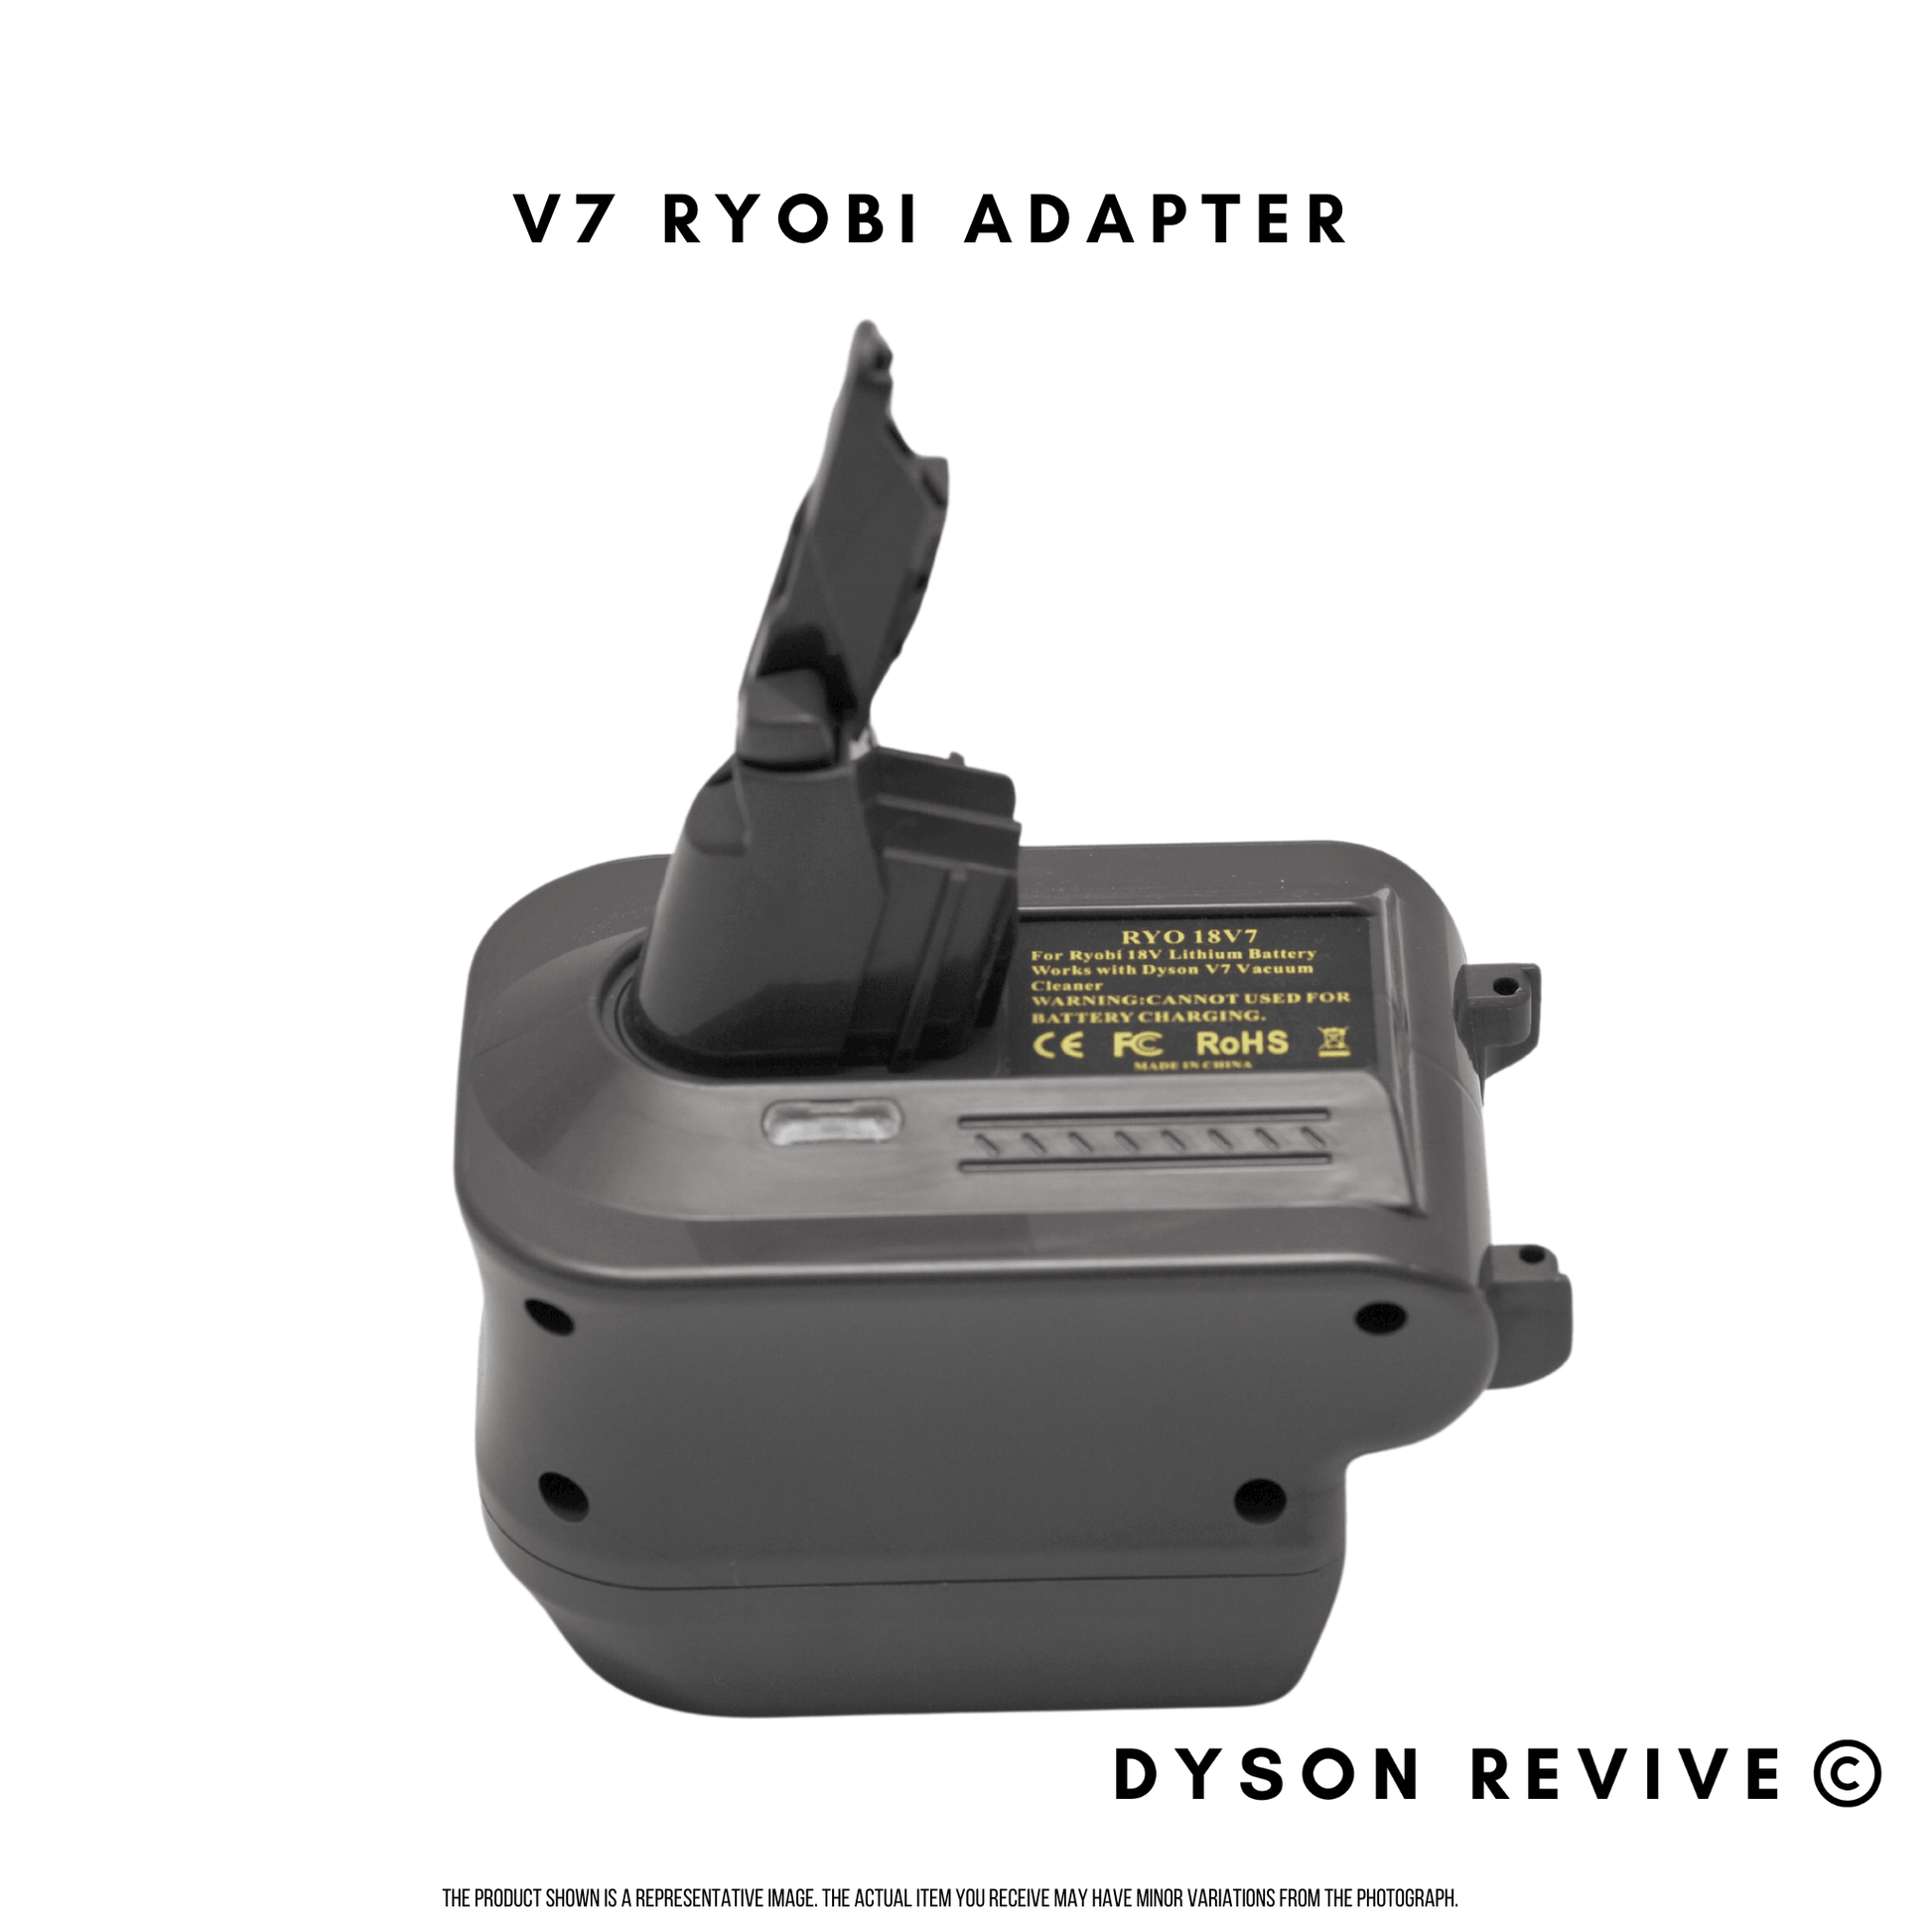 V7/V8 Adapters - Dyson Revive